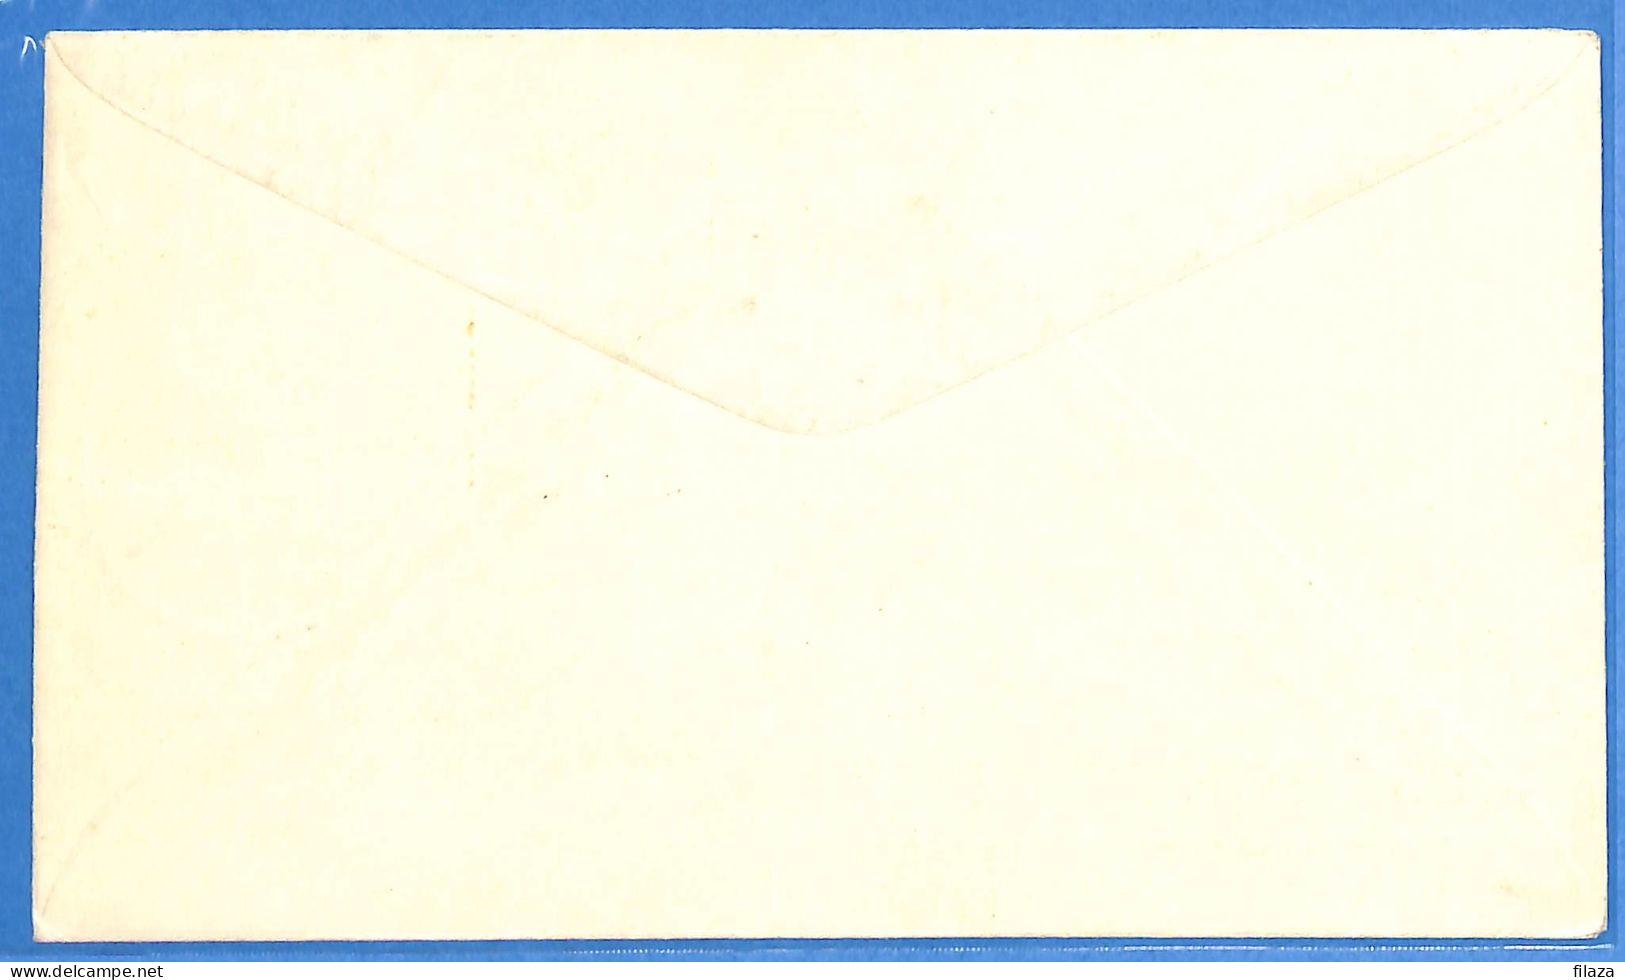 Saar - 1955 - Carte Postale FDC De Saarbrücken - G31906 - FDC